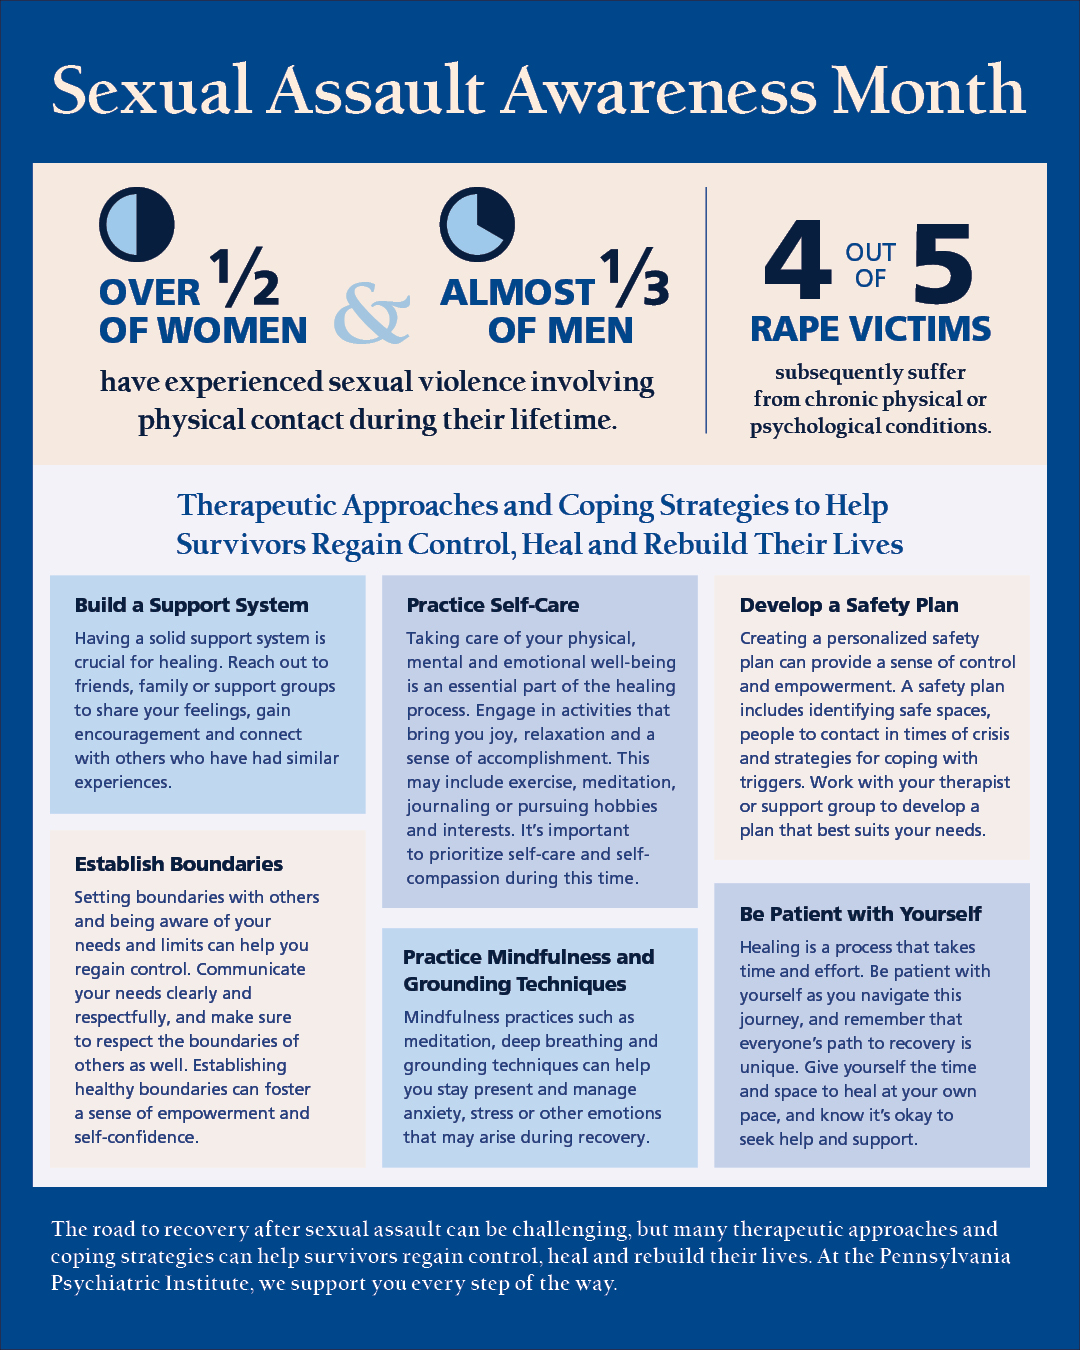 Sexual Assault Awareness Month Information